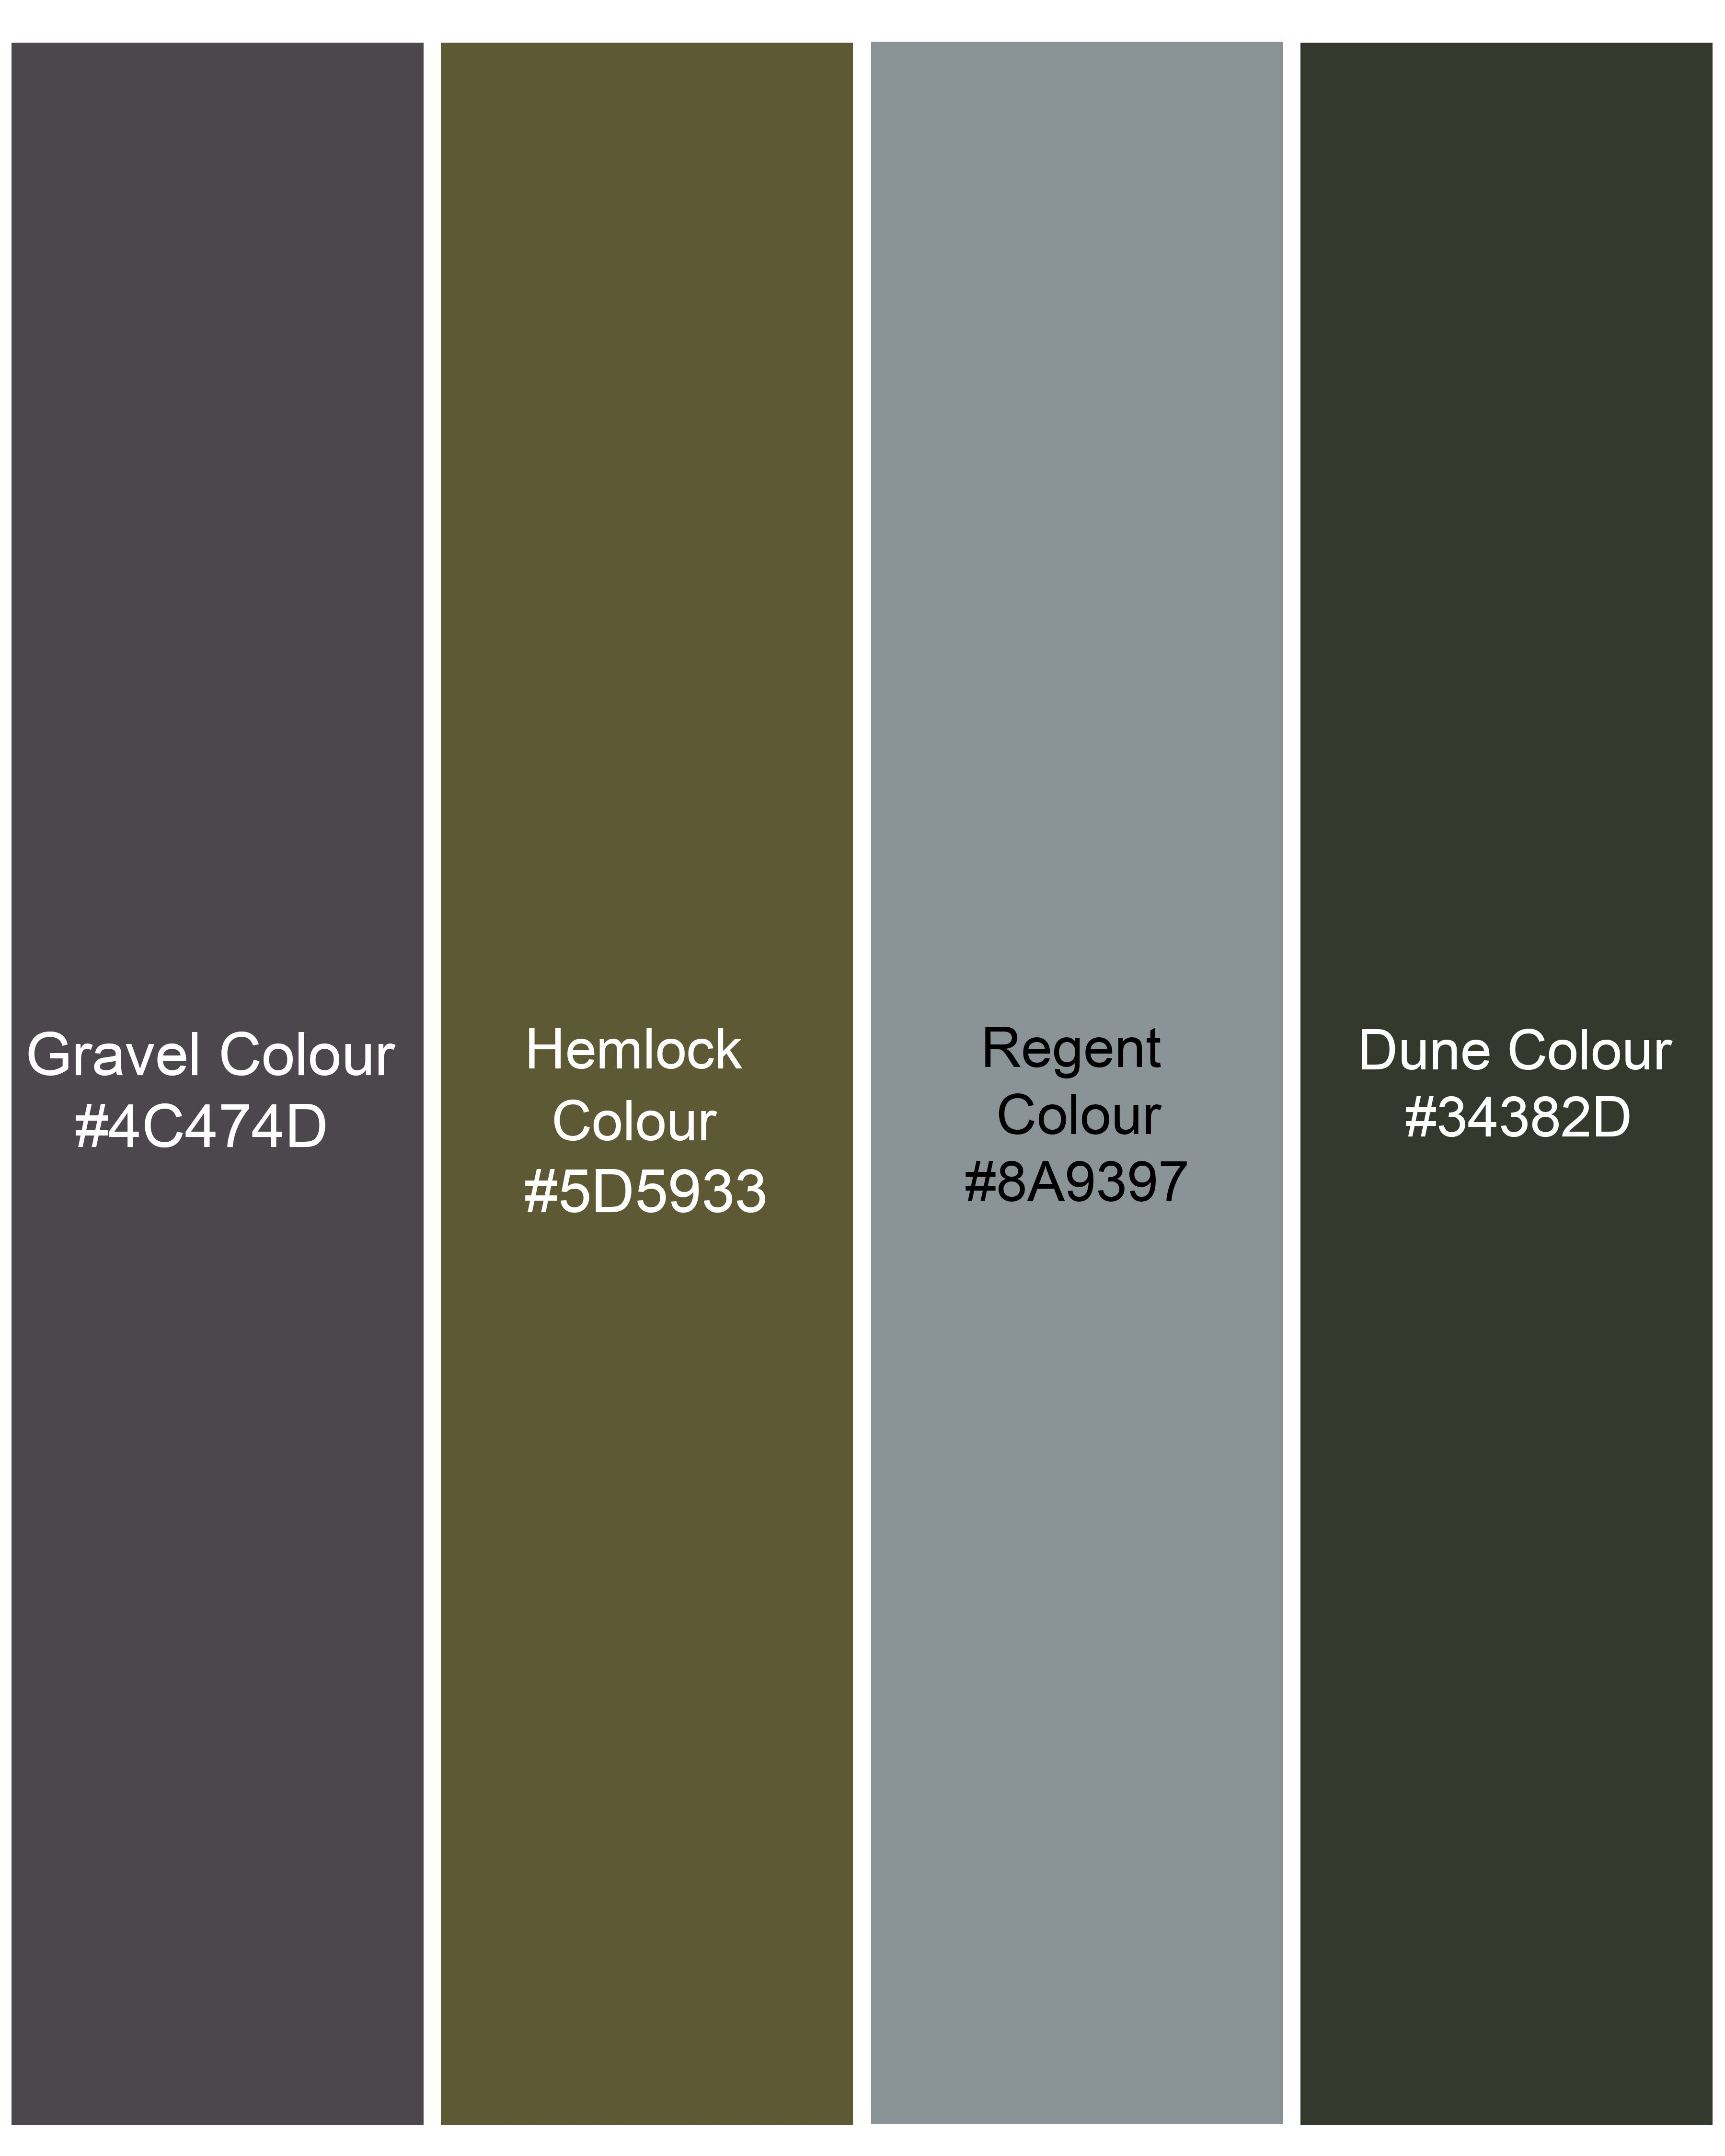 Gravel Gray with Hemlock Green Camouflage Printed Royal Oxford Designer Shirt 8903-P325-38, 8903-P325-H-38,  8903-P325-39,  8903-P325-H-39,  8903-P325-40,  8903-P325-H-40,  8903-P325-42,  8903-P325-H-42,  8903-P325-44,  8903-P325-H-44,  8903-P325-46,  8903-P325-H-46,  8903-P325-48,  8903-P325-H-48,  8903-P325-50,  8903-P325-H-50,  8903-P325-52,  8903-P325-H-52